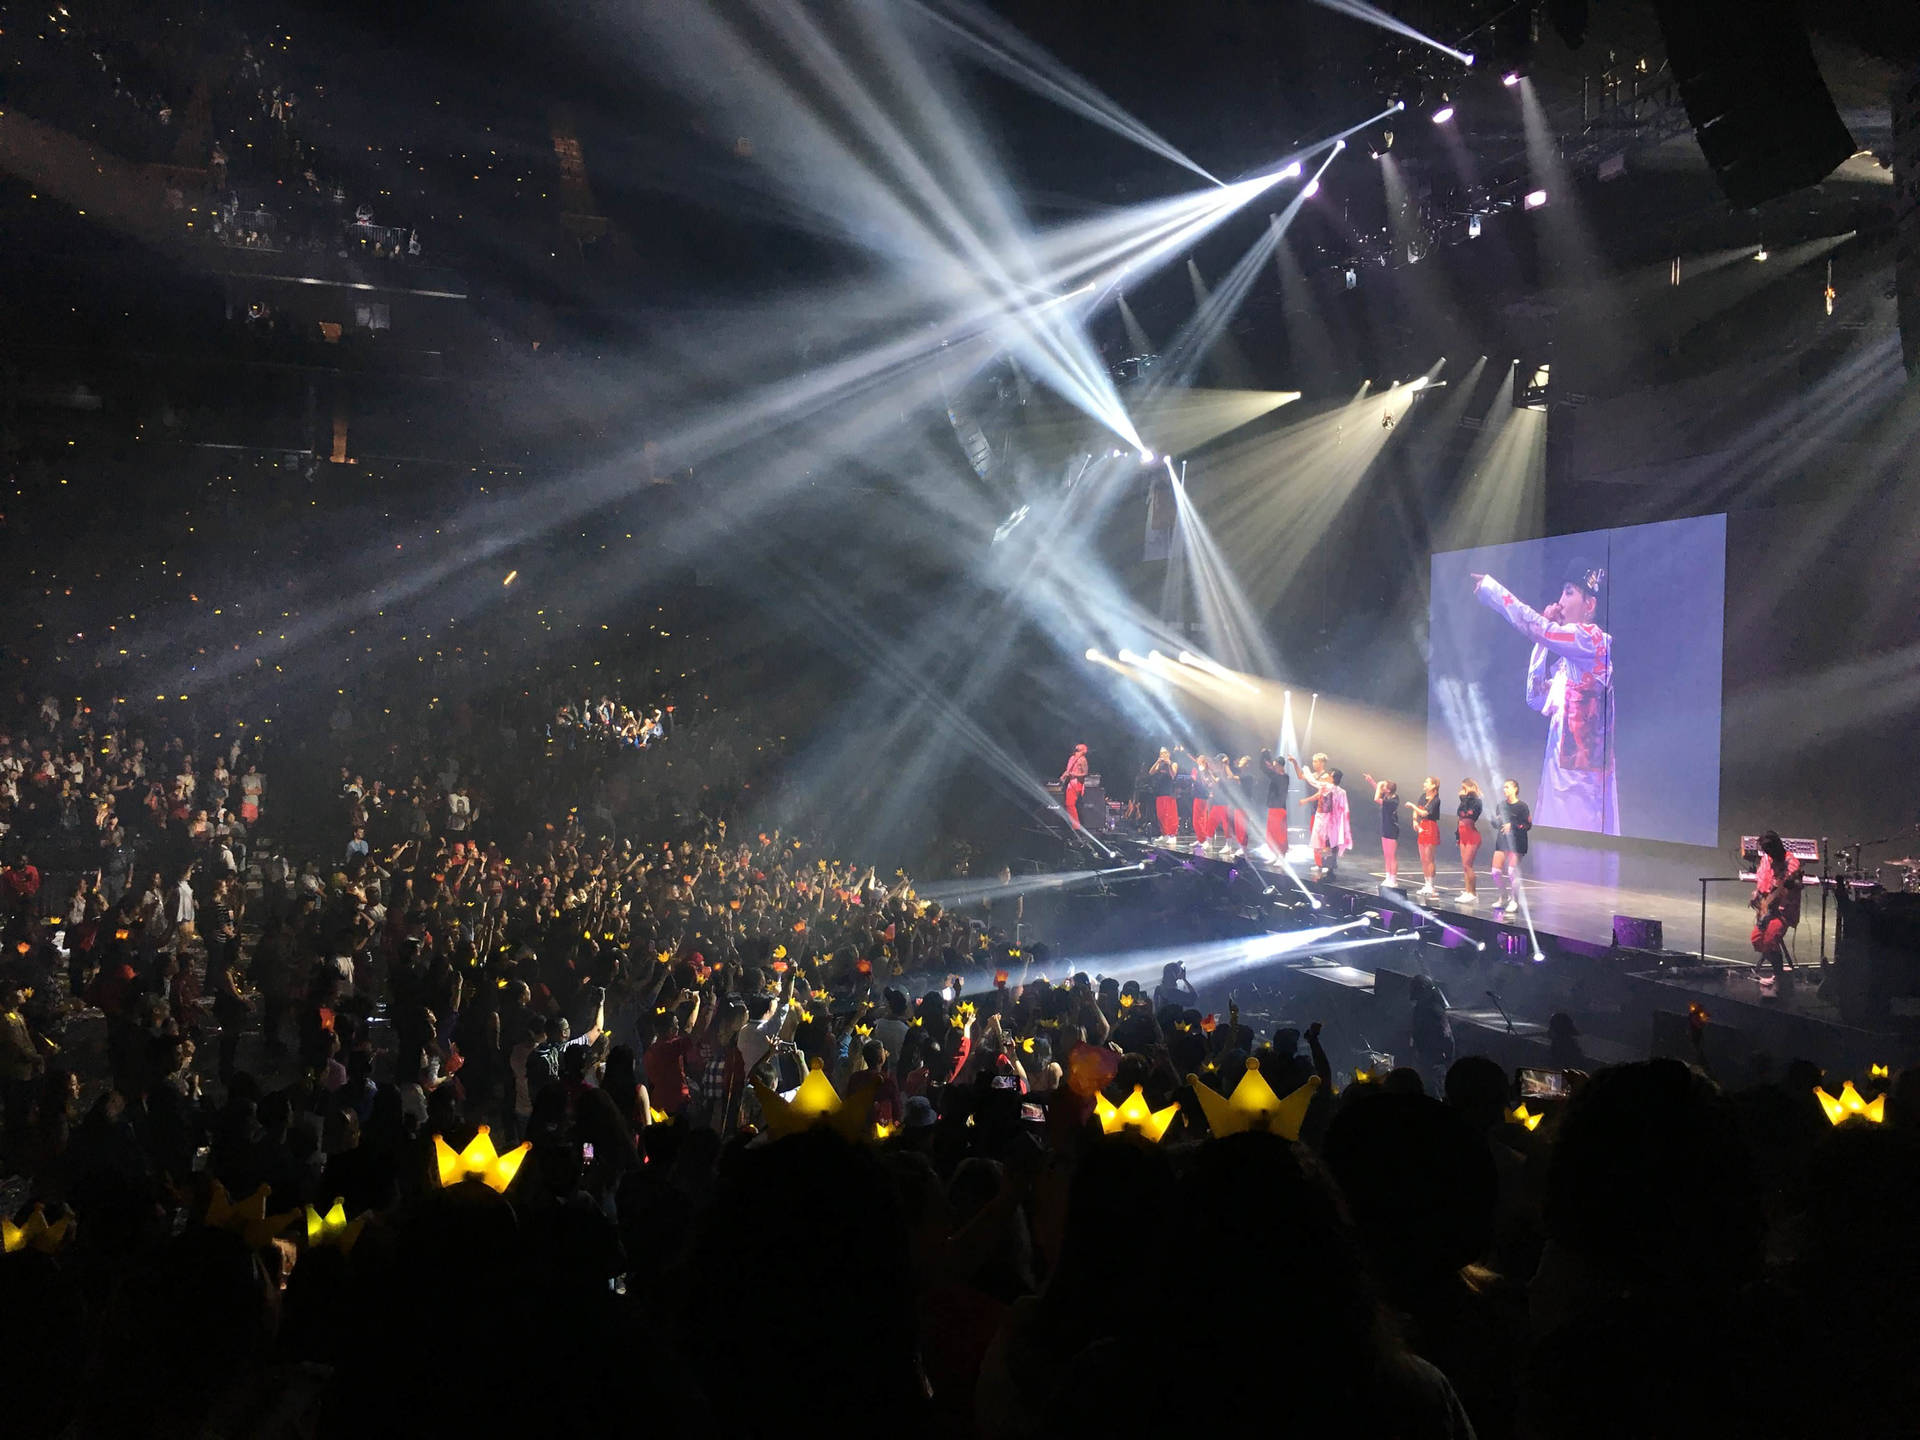 G-dragon Glamorous In Concert - A Festival Of K-pop Music Background